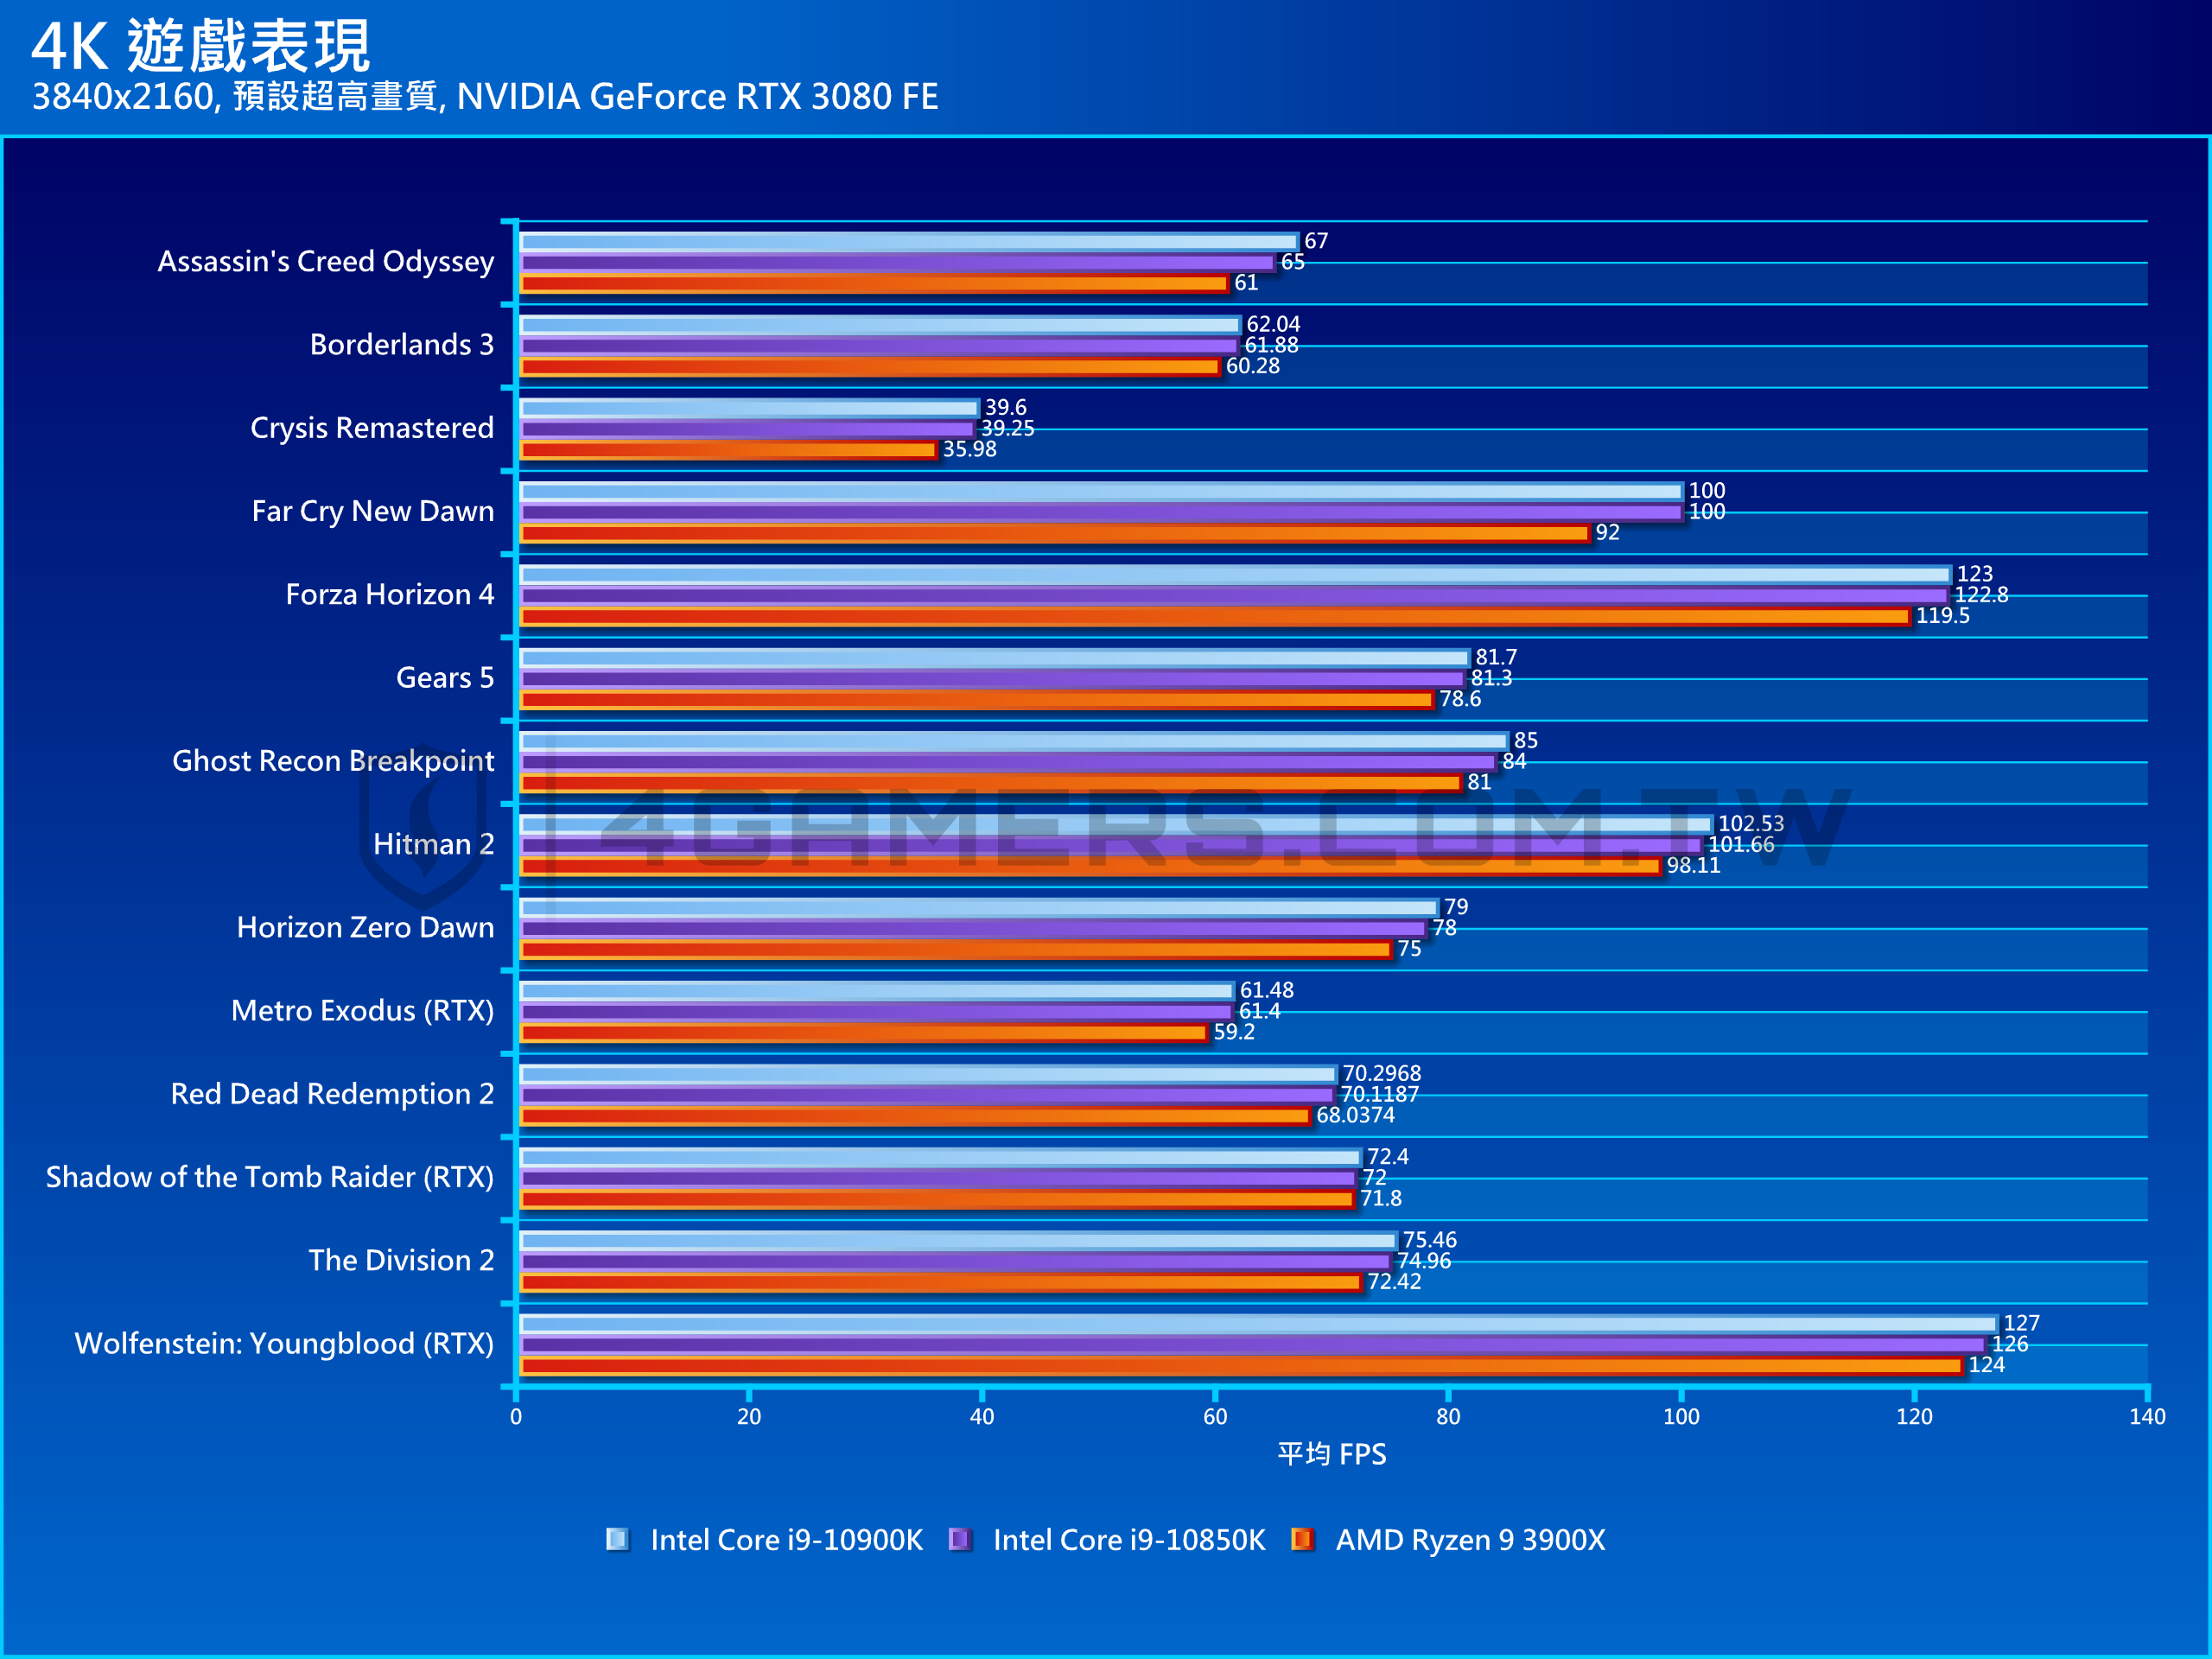 Intel Core i9-10850K / i9-10850KA